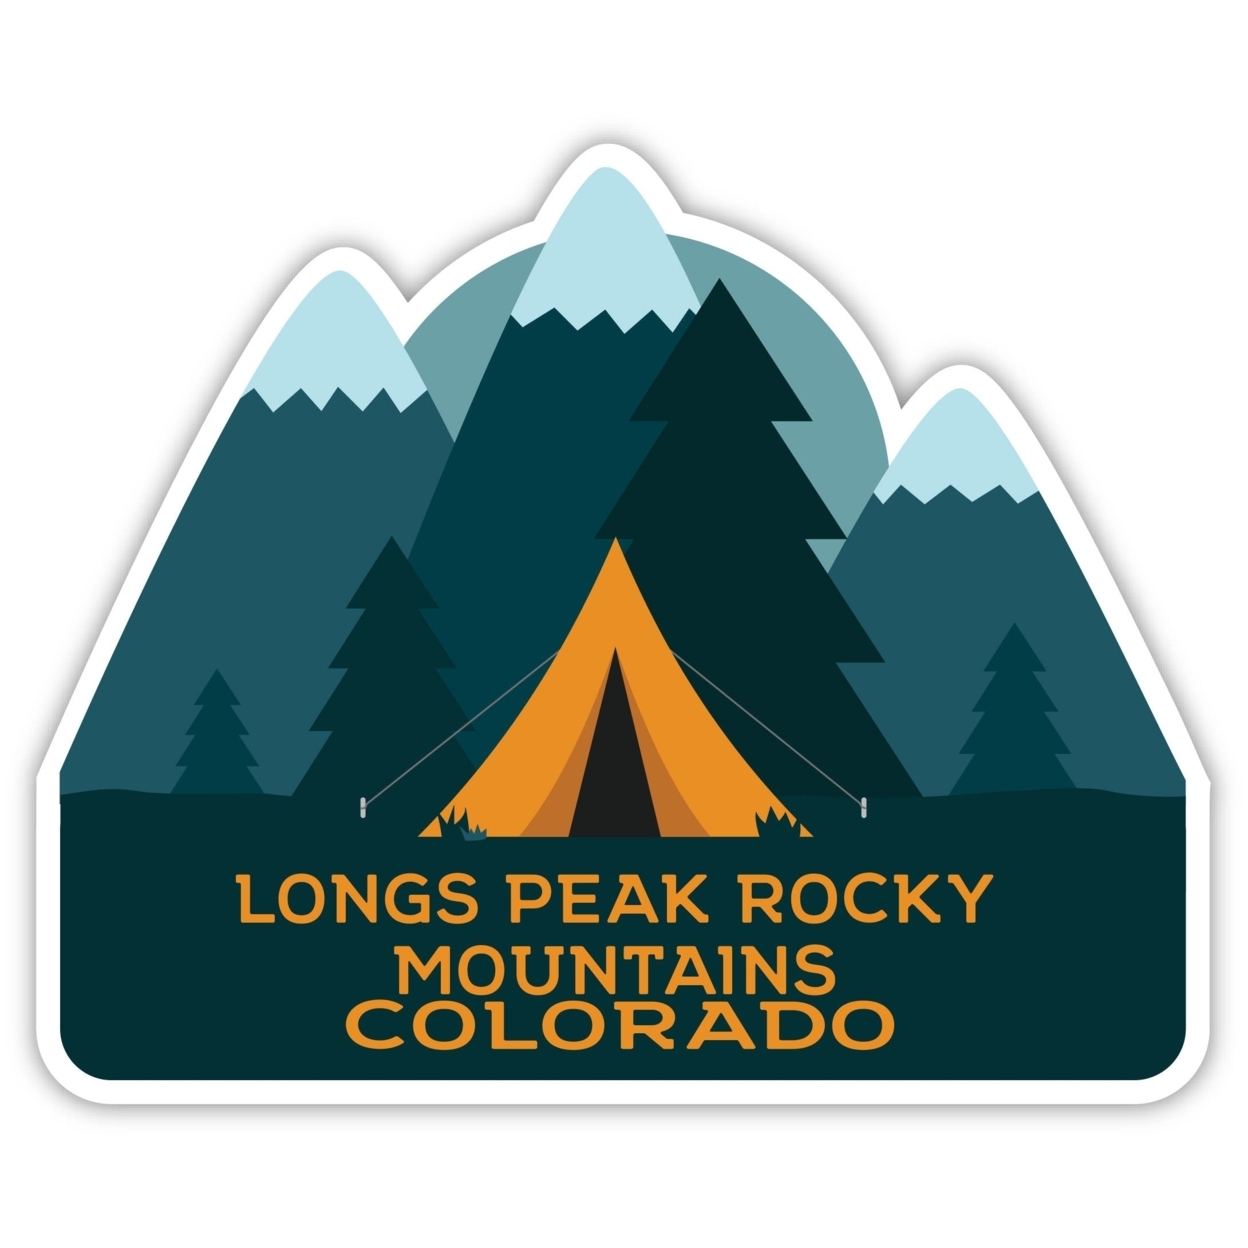 Longs Peak Rocky Mountains Colorado Souvenir Decorative Stickers (Choose Theme And Size) - 4-Inch, Tent